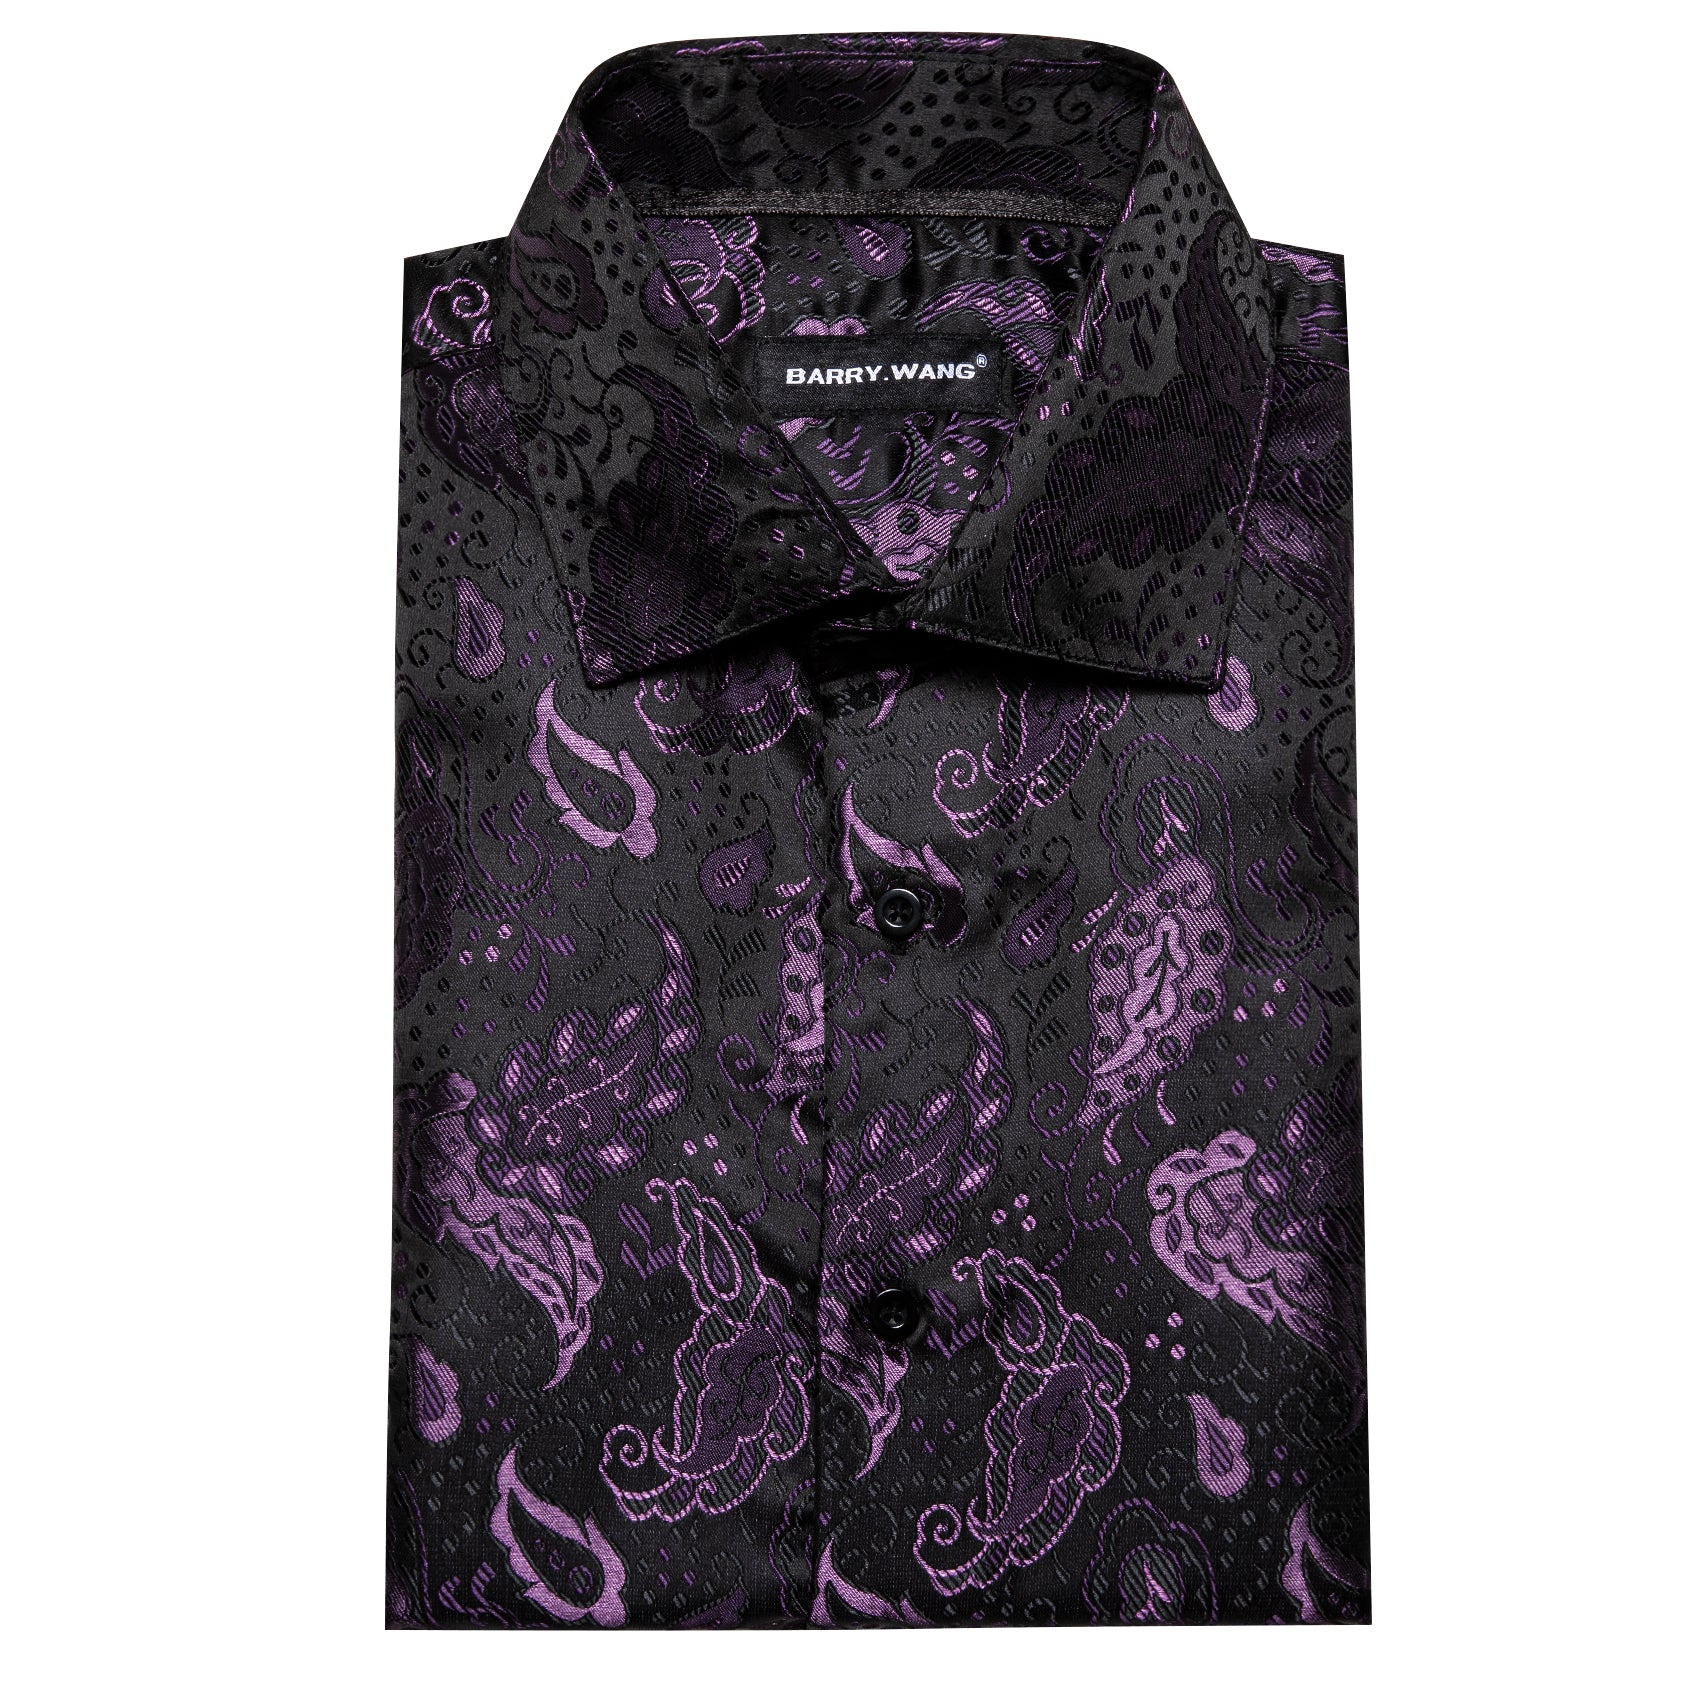 Barry.wang Black Purple Paisley Silk Men's Shirt